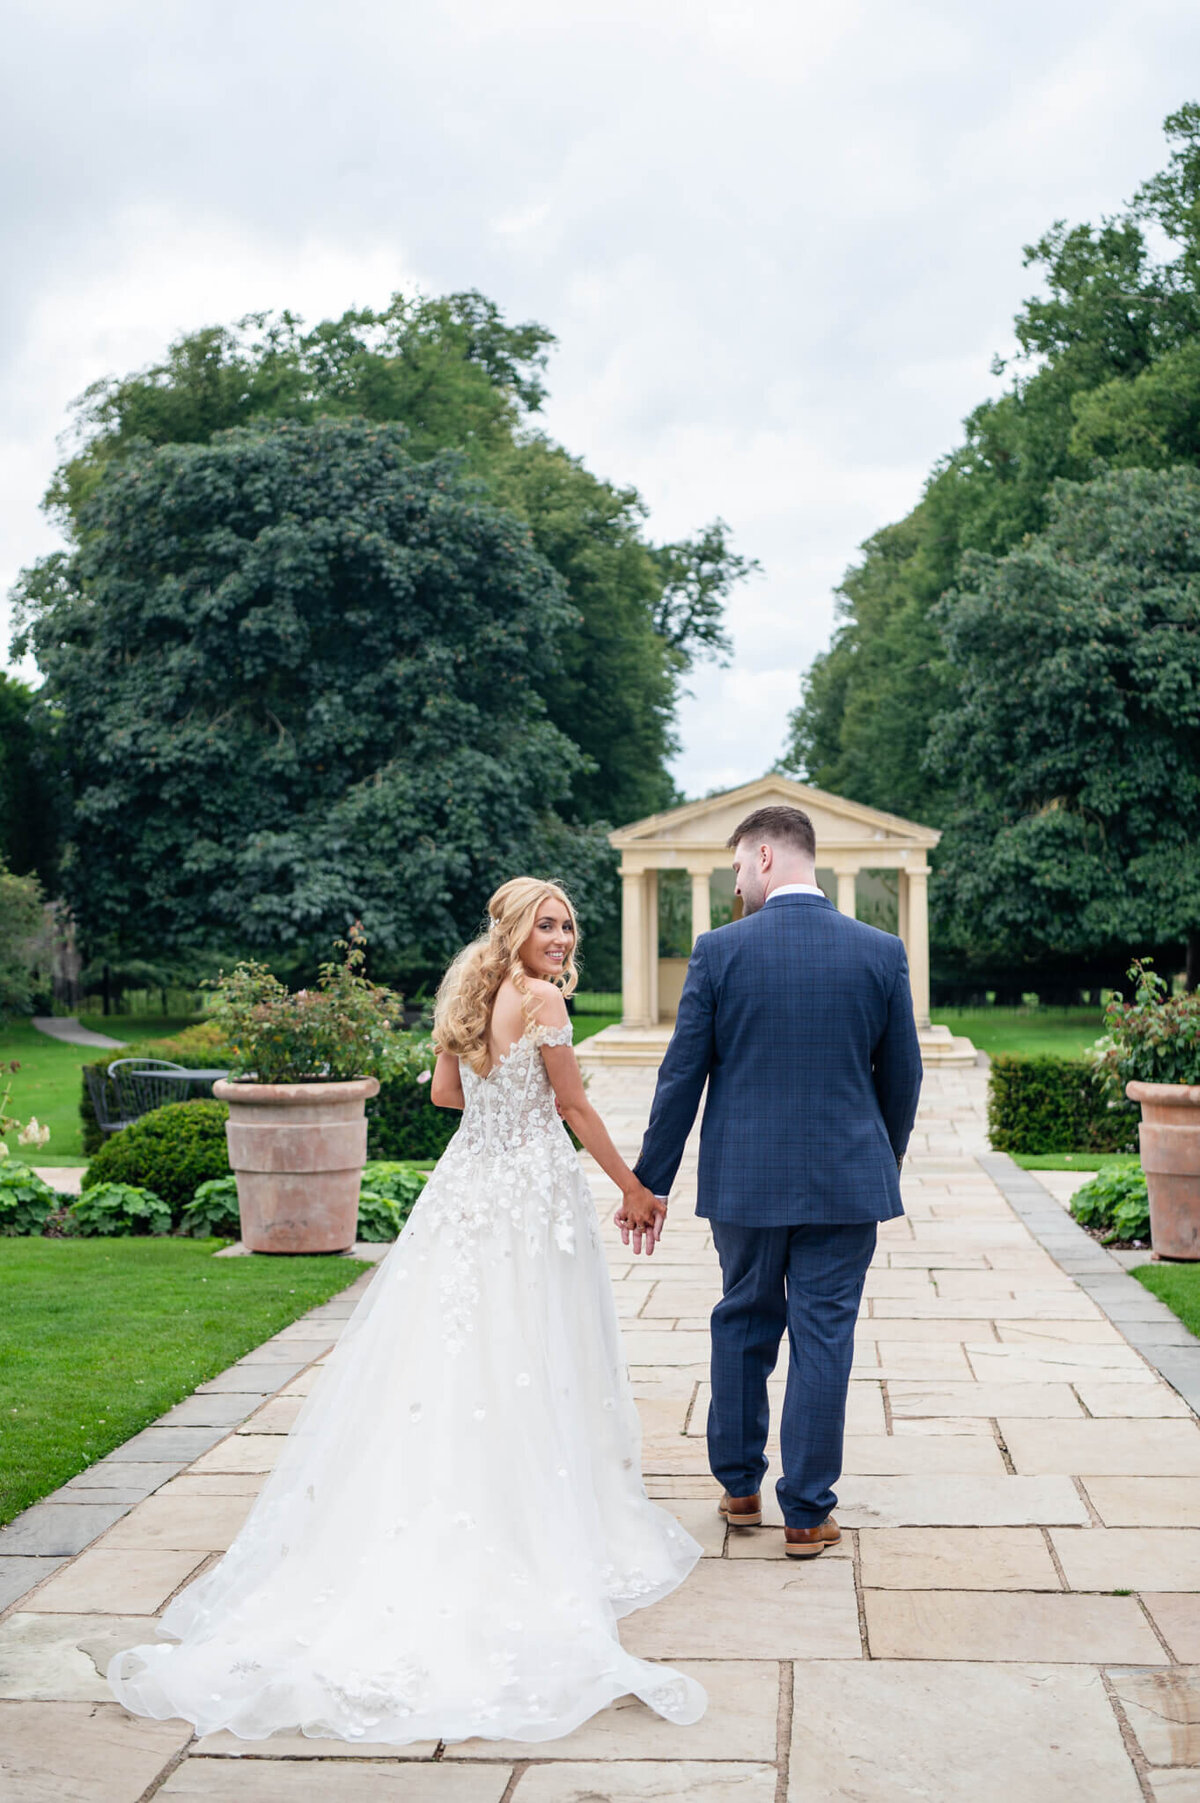 Rowton Castle Wedding Photographer - Shropshire UK Wedding Photographer - Chloe Bolam - E&A - 19.08.23 267